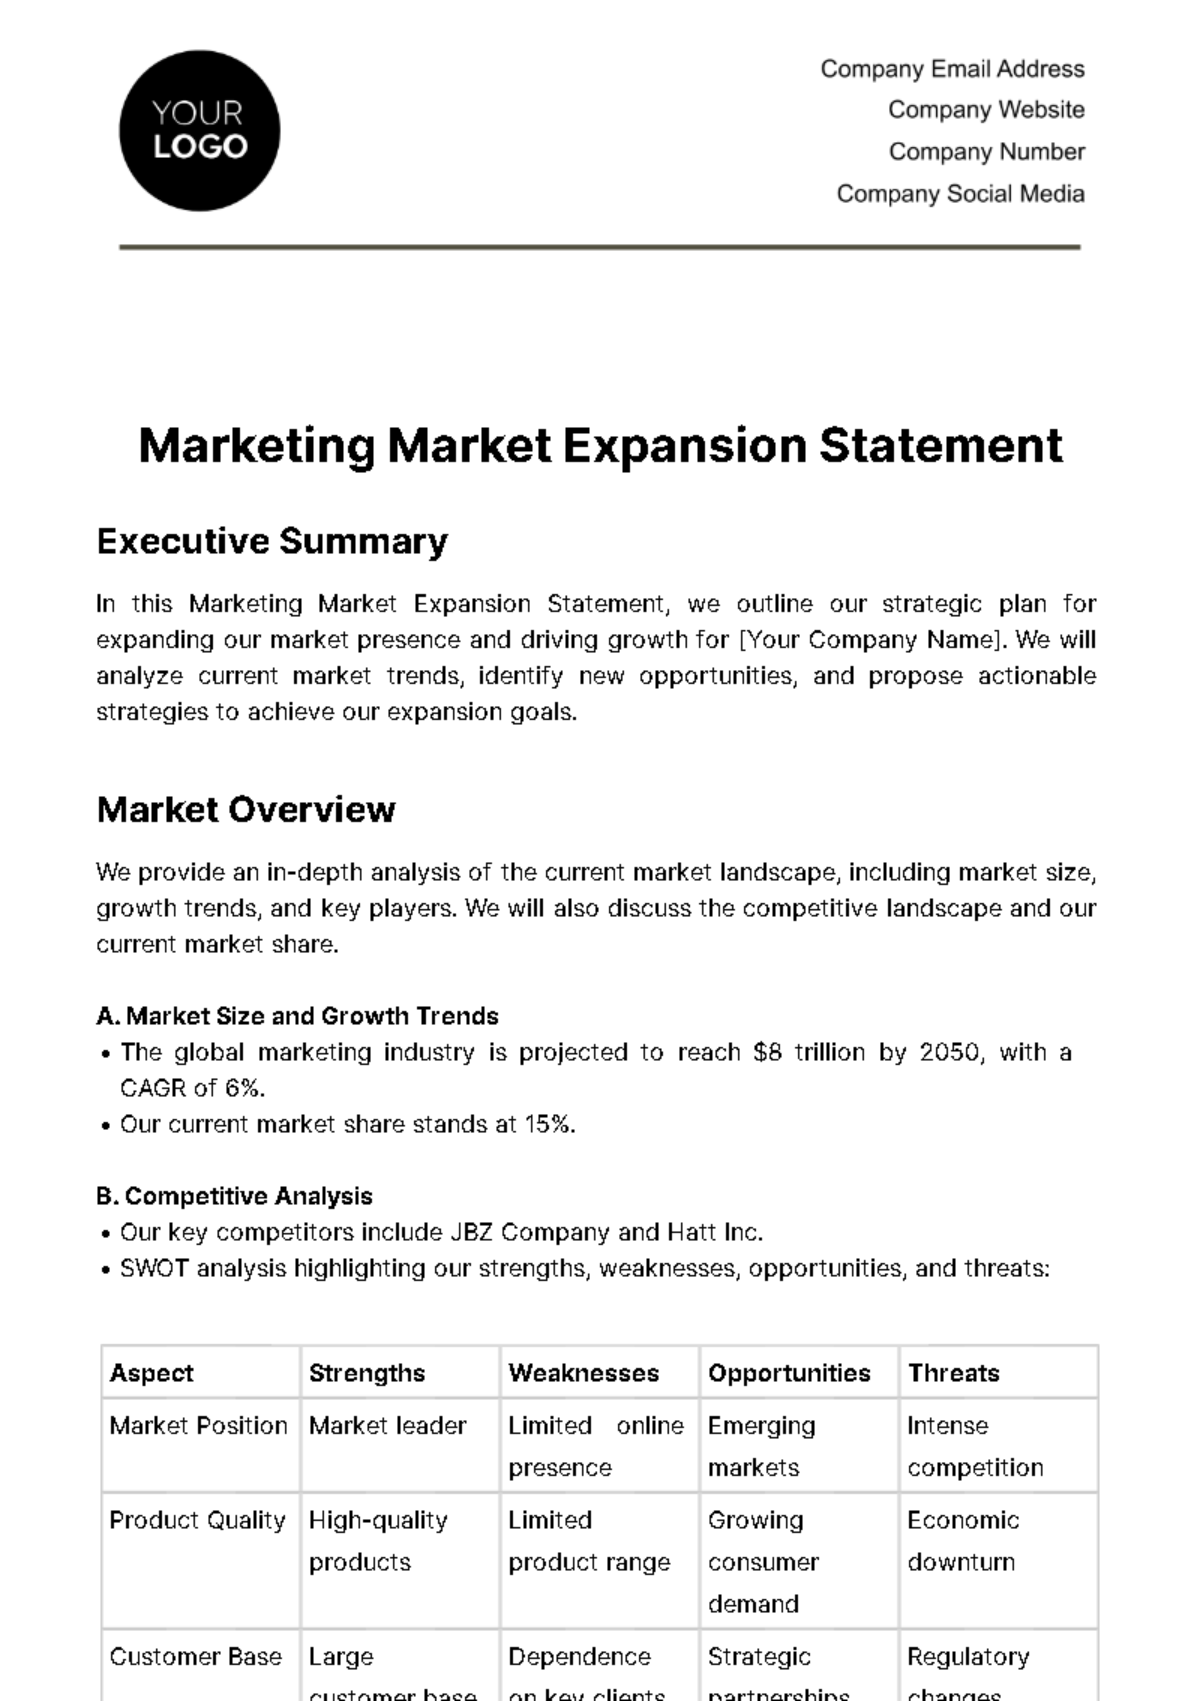 Free Marketing Market Expansion Statement Template